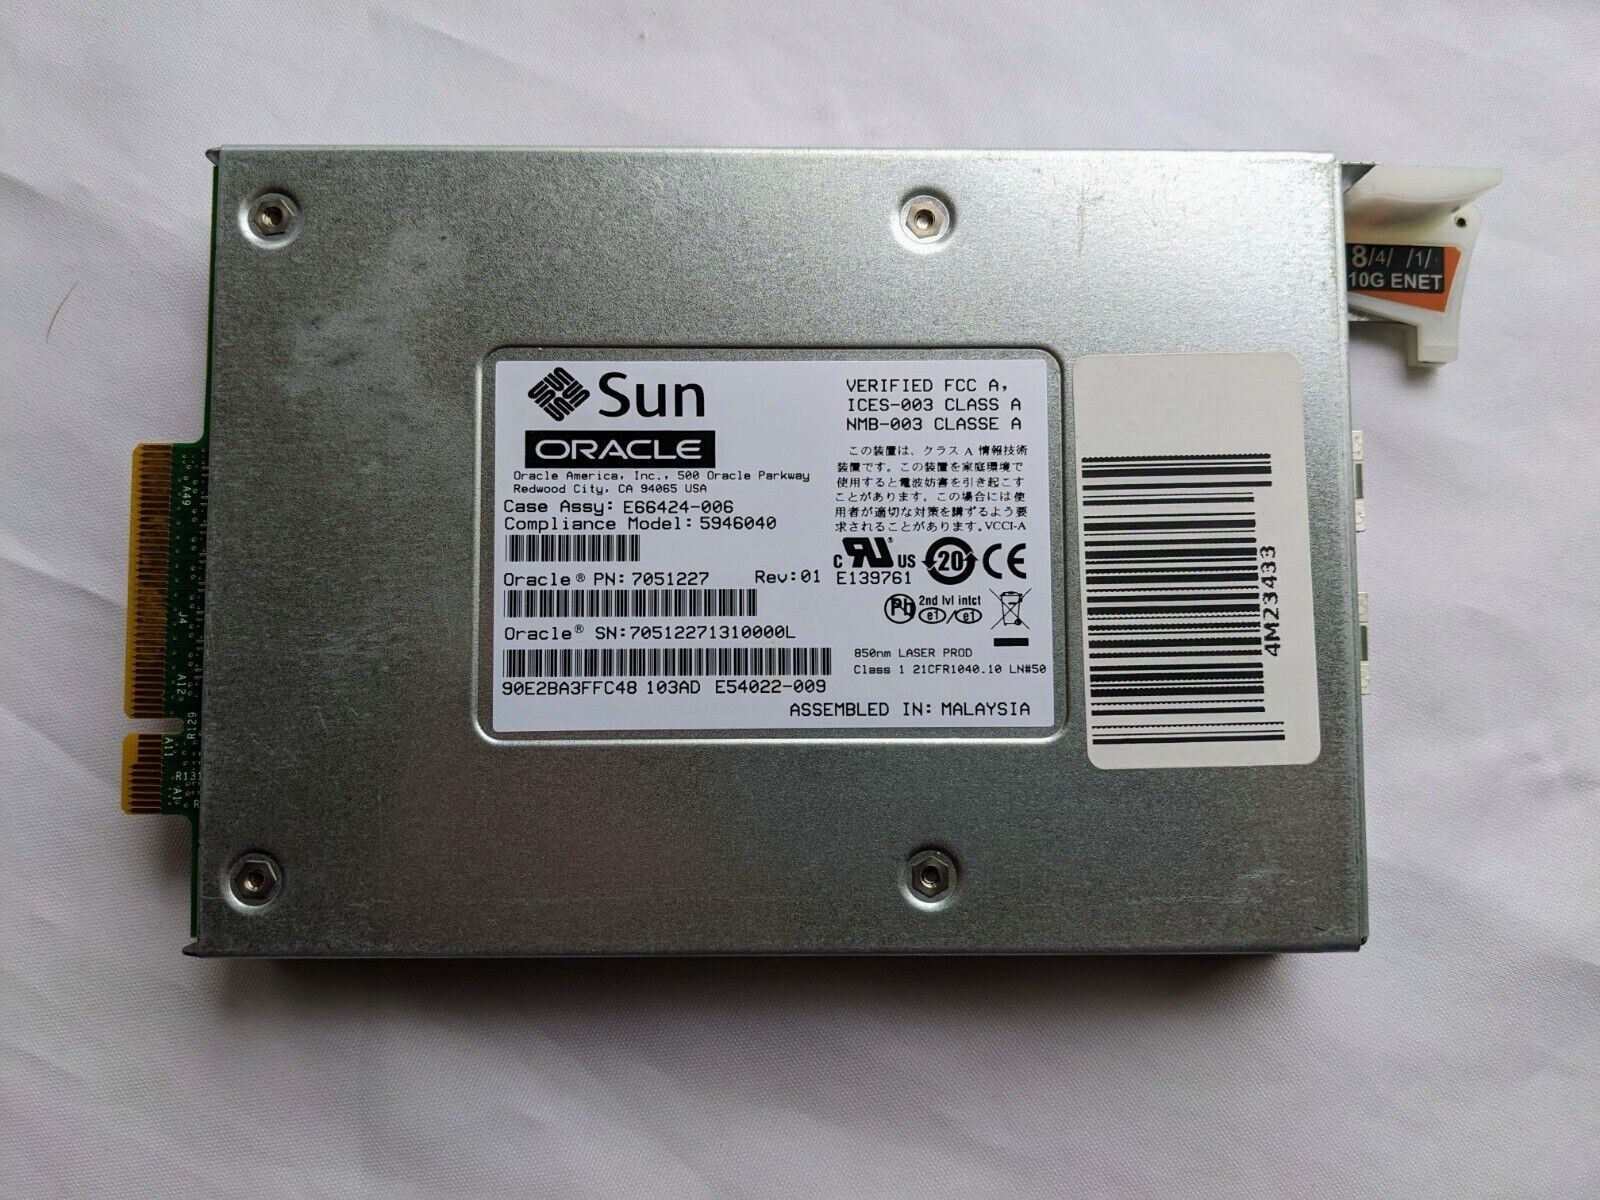 Sun Oracle 7051227  X1110A-Z Dual 10-Gigabit SFP+ Ethernet ExpressModule